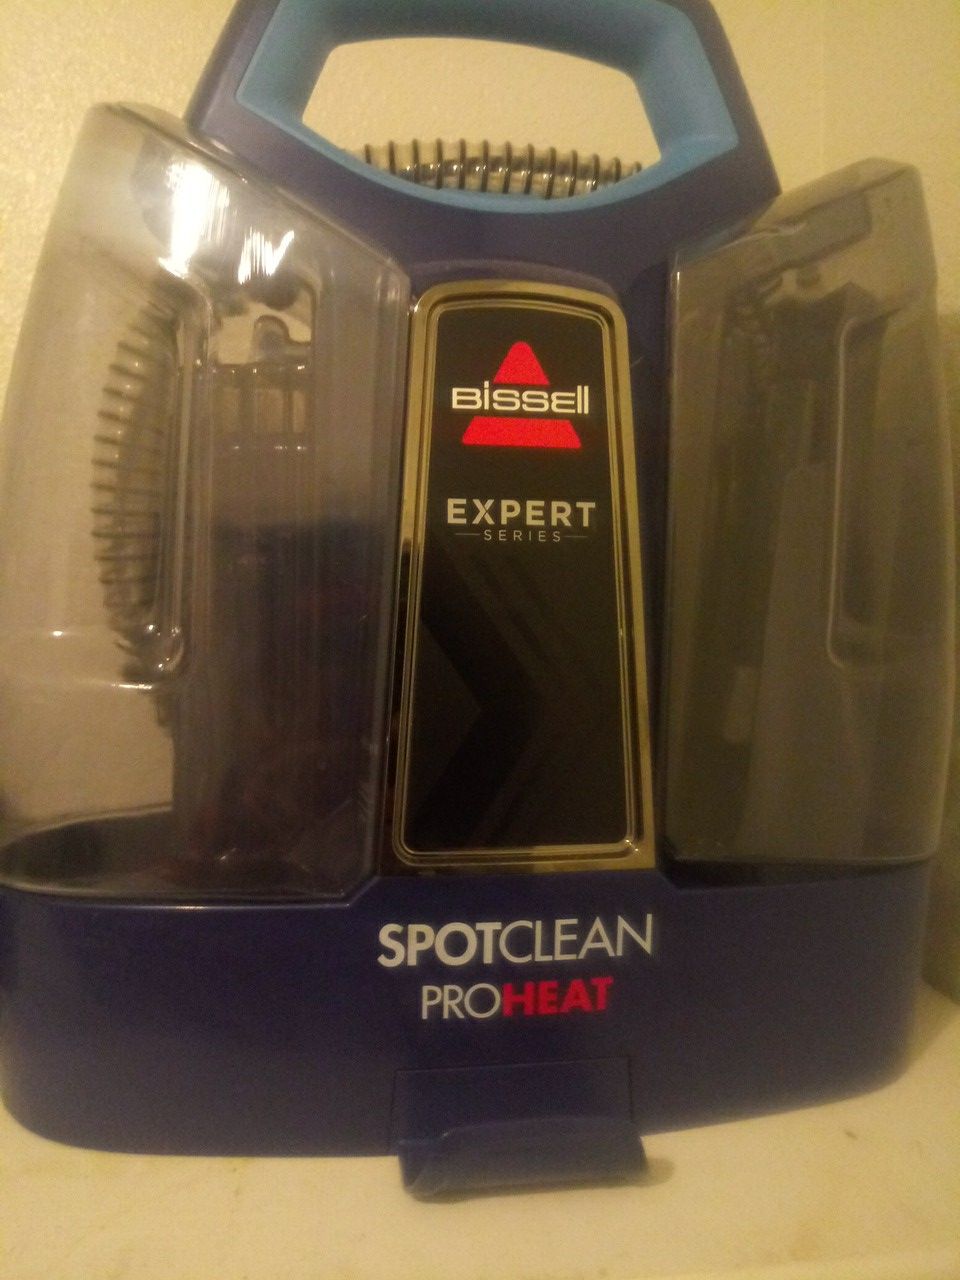 Bissell expert series spotclean proheat portable carpet shampooer